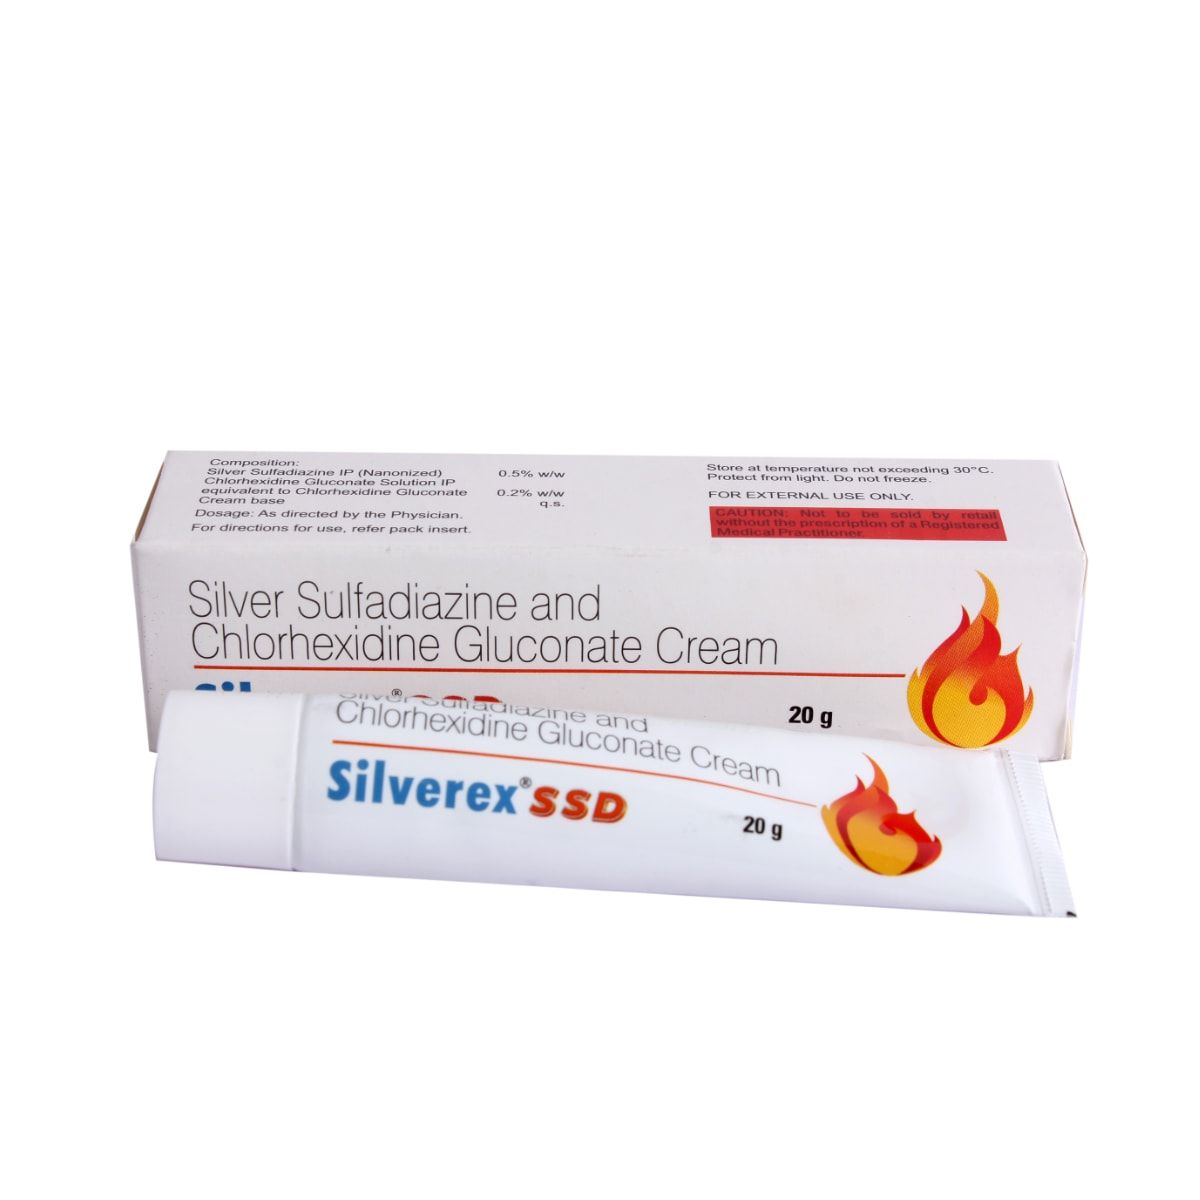 Silverex SSD Cream 20 gm, Pack of 1 CREAM